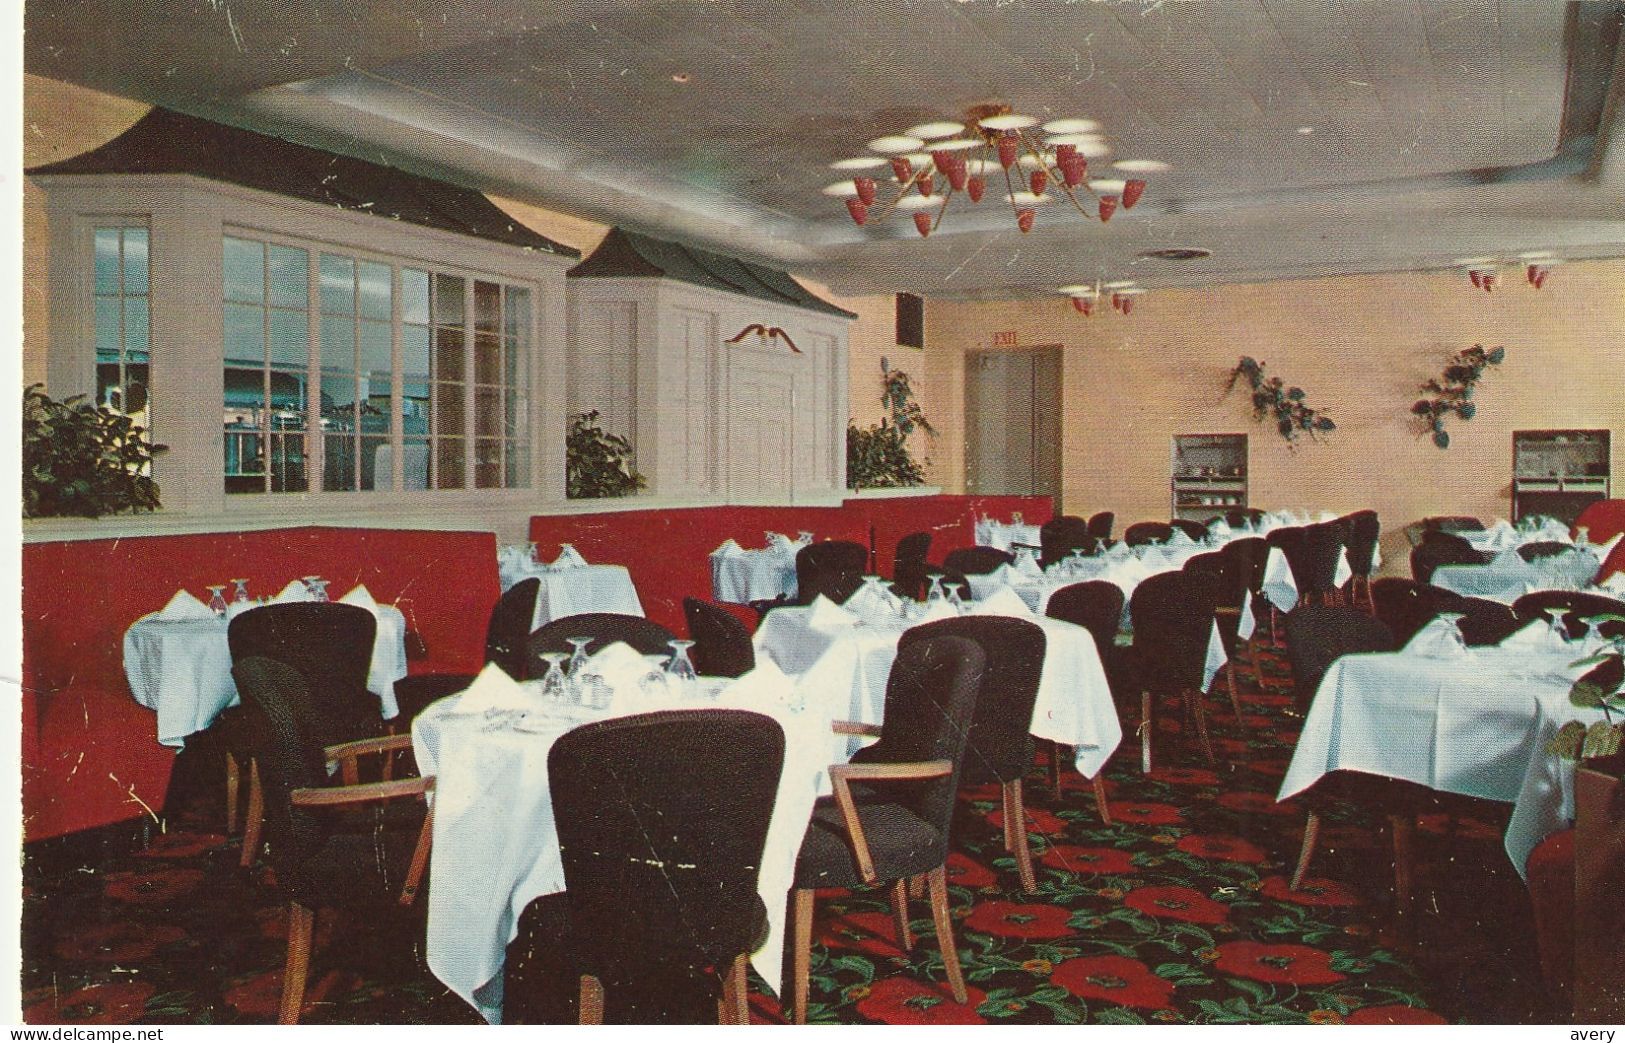 The New Touraine Grille, Hotel Touraine, Boston, Massachusetts - Boston